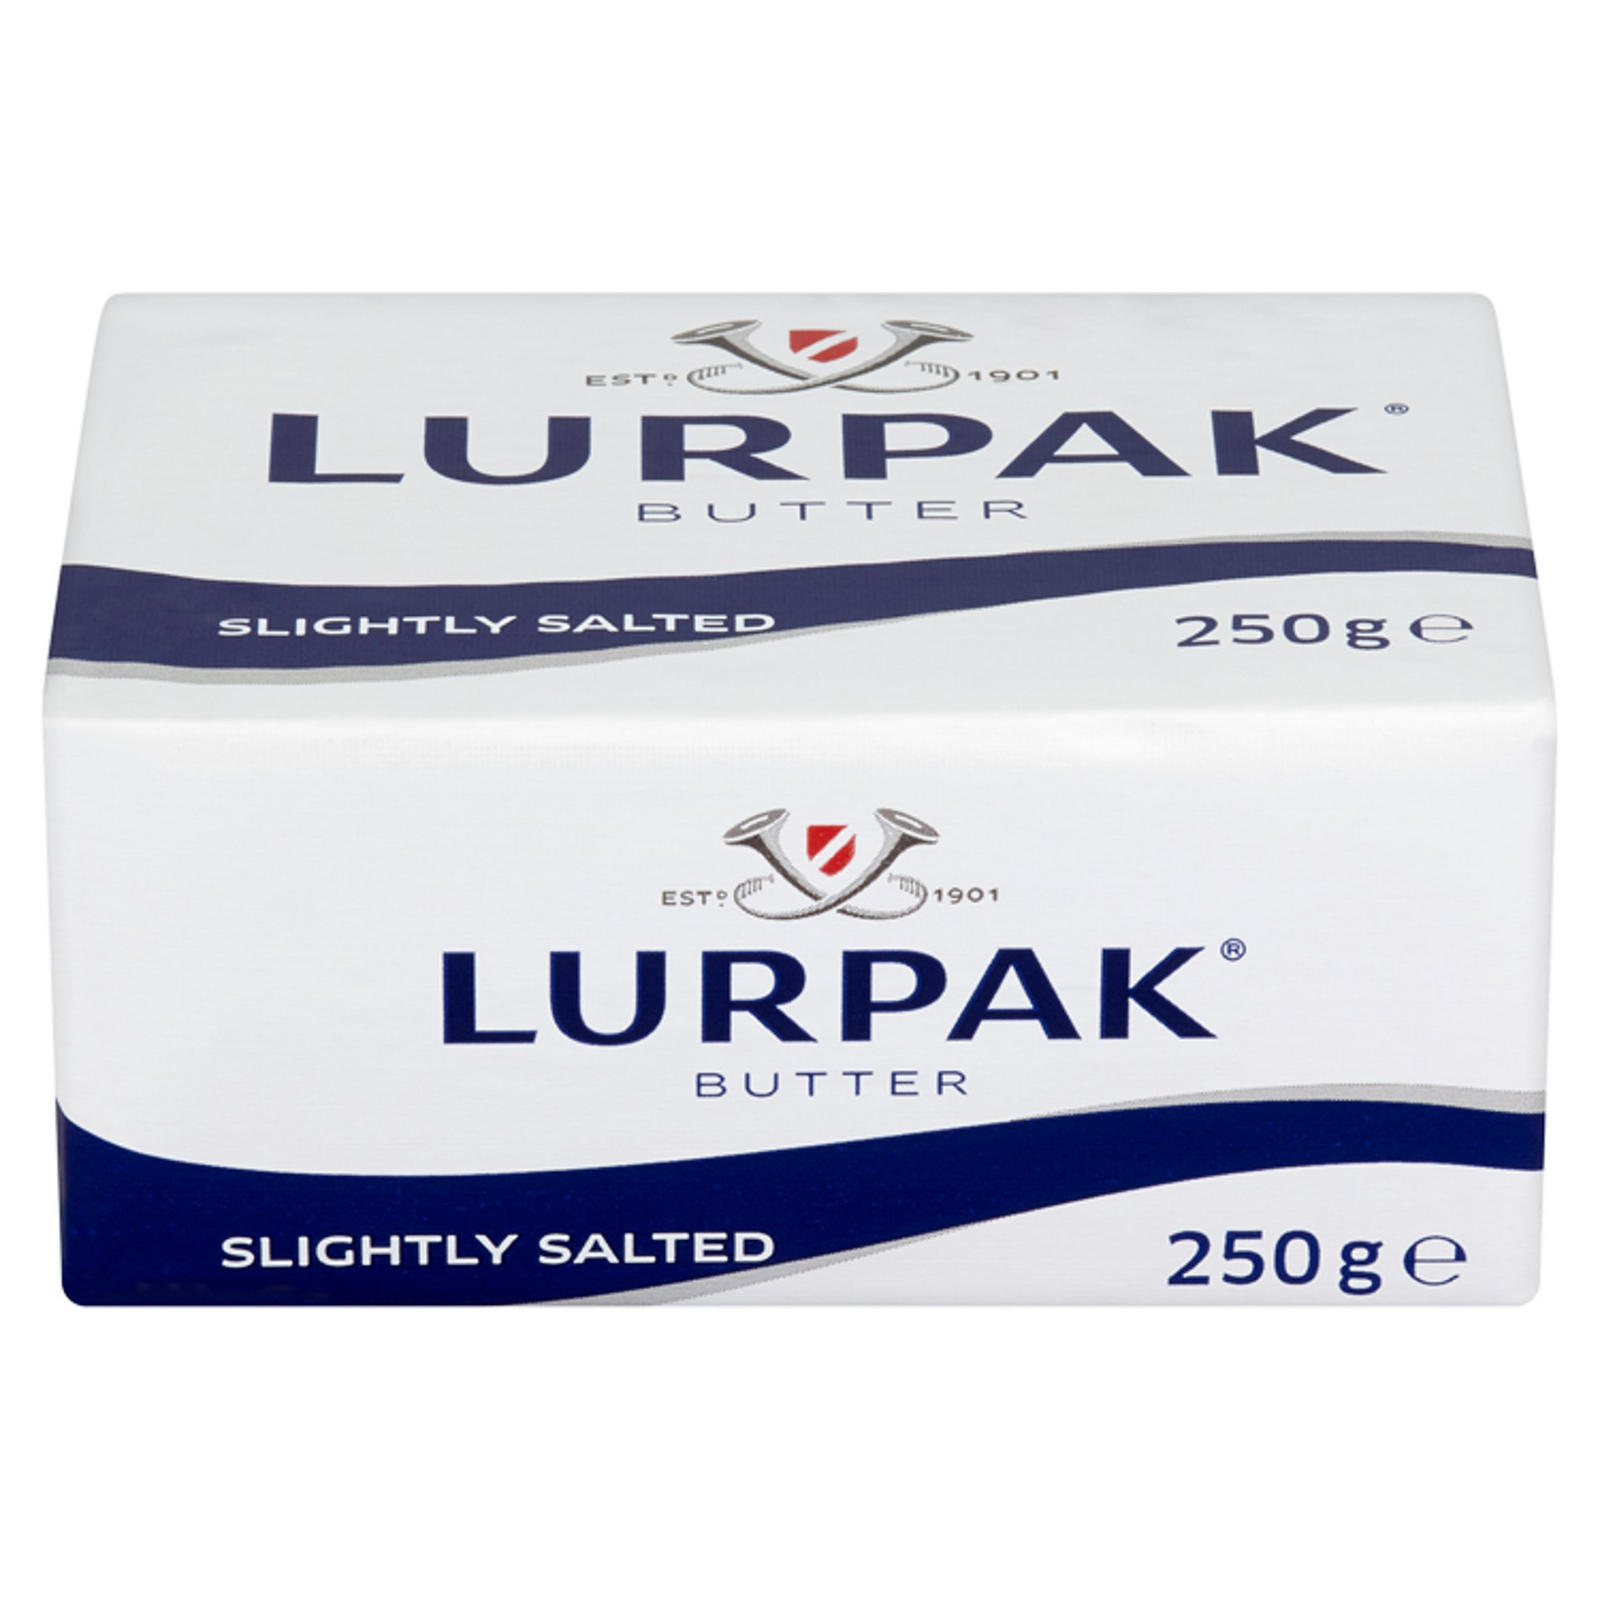 lurpak butter prices - photo #11